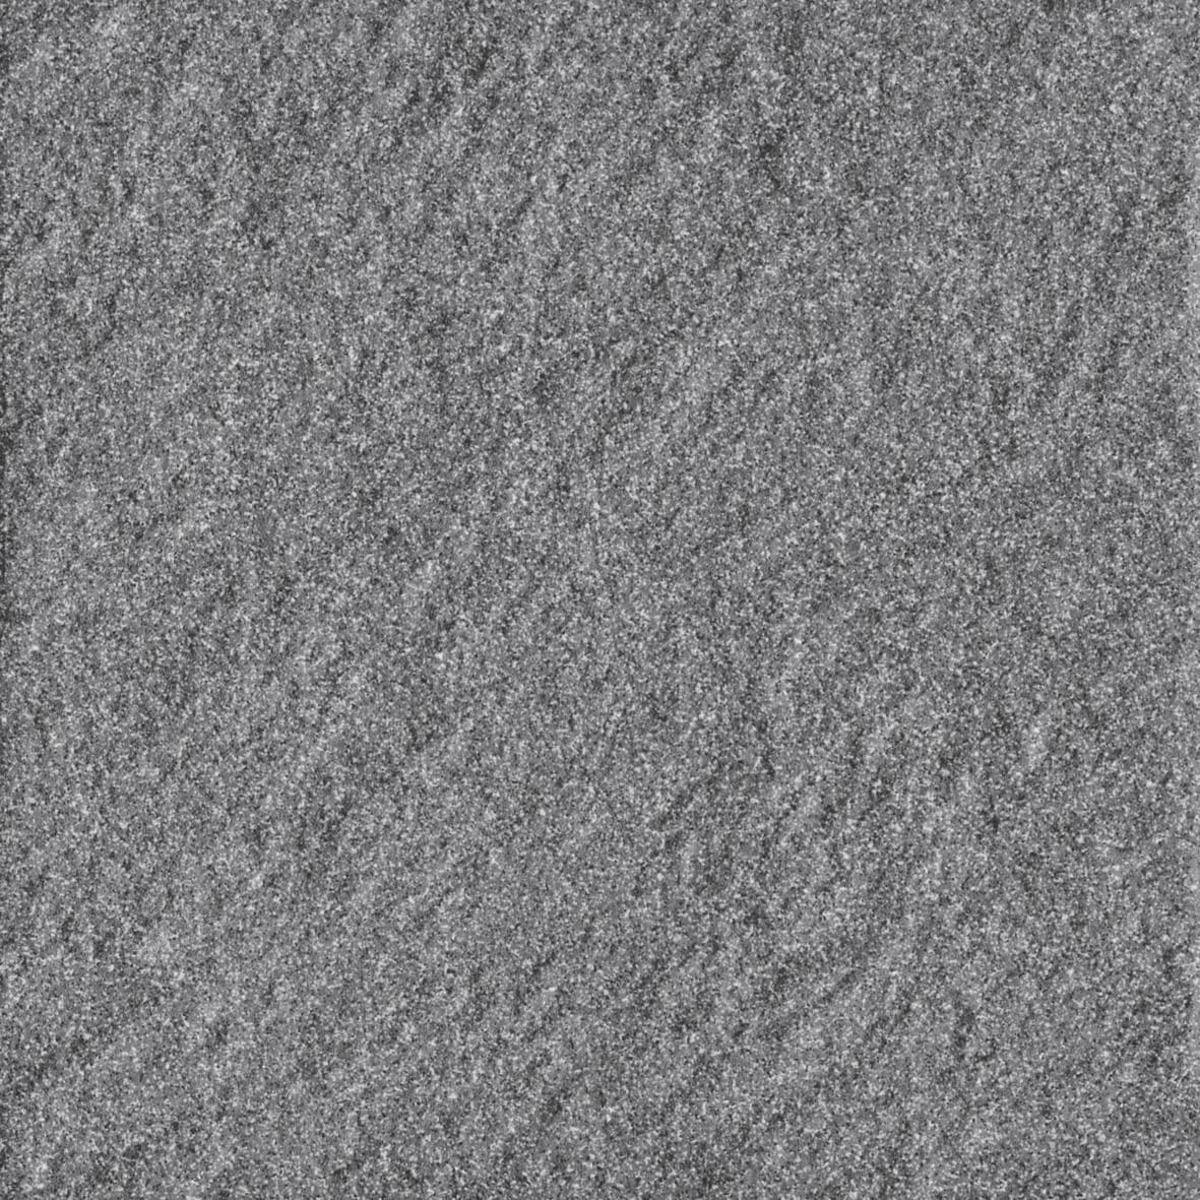 Dlažba Rako Taurus Granit antracitově šedá 20x20 cm protiskluz TR725065.1 Rako